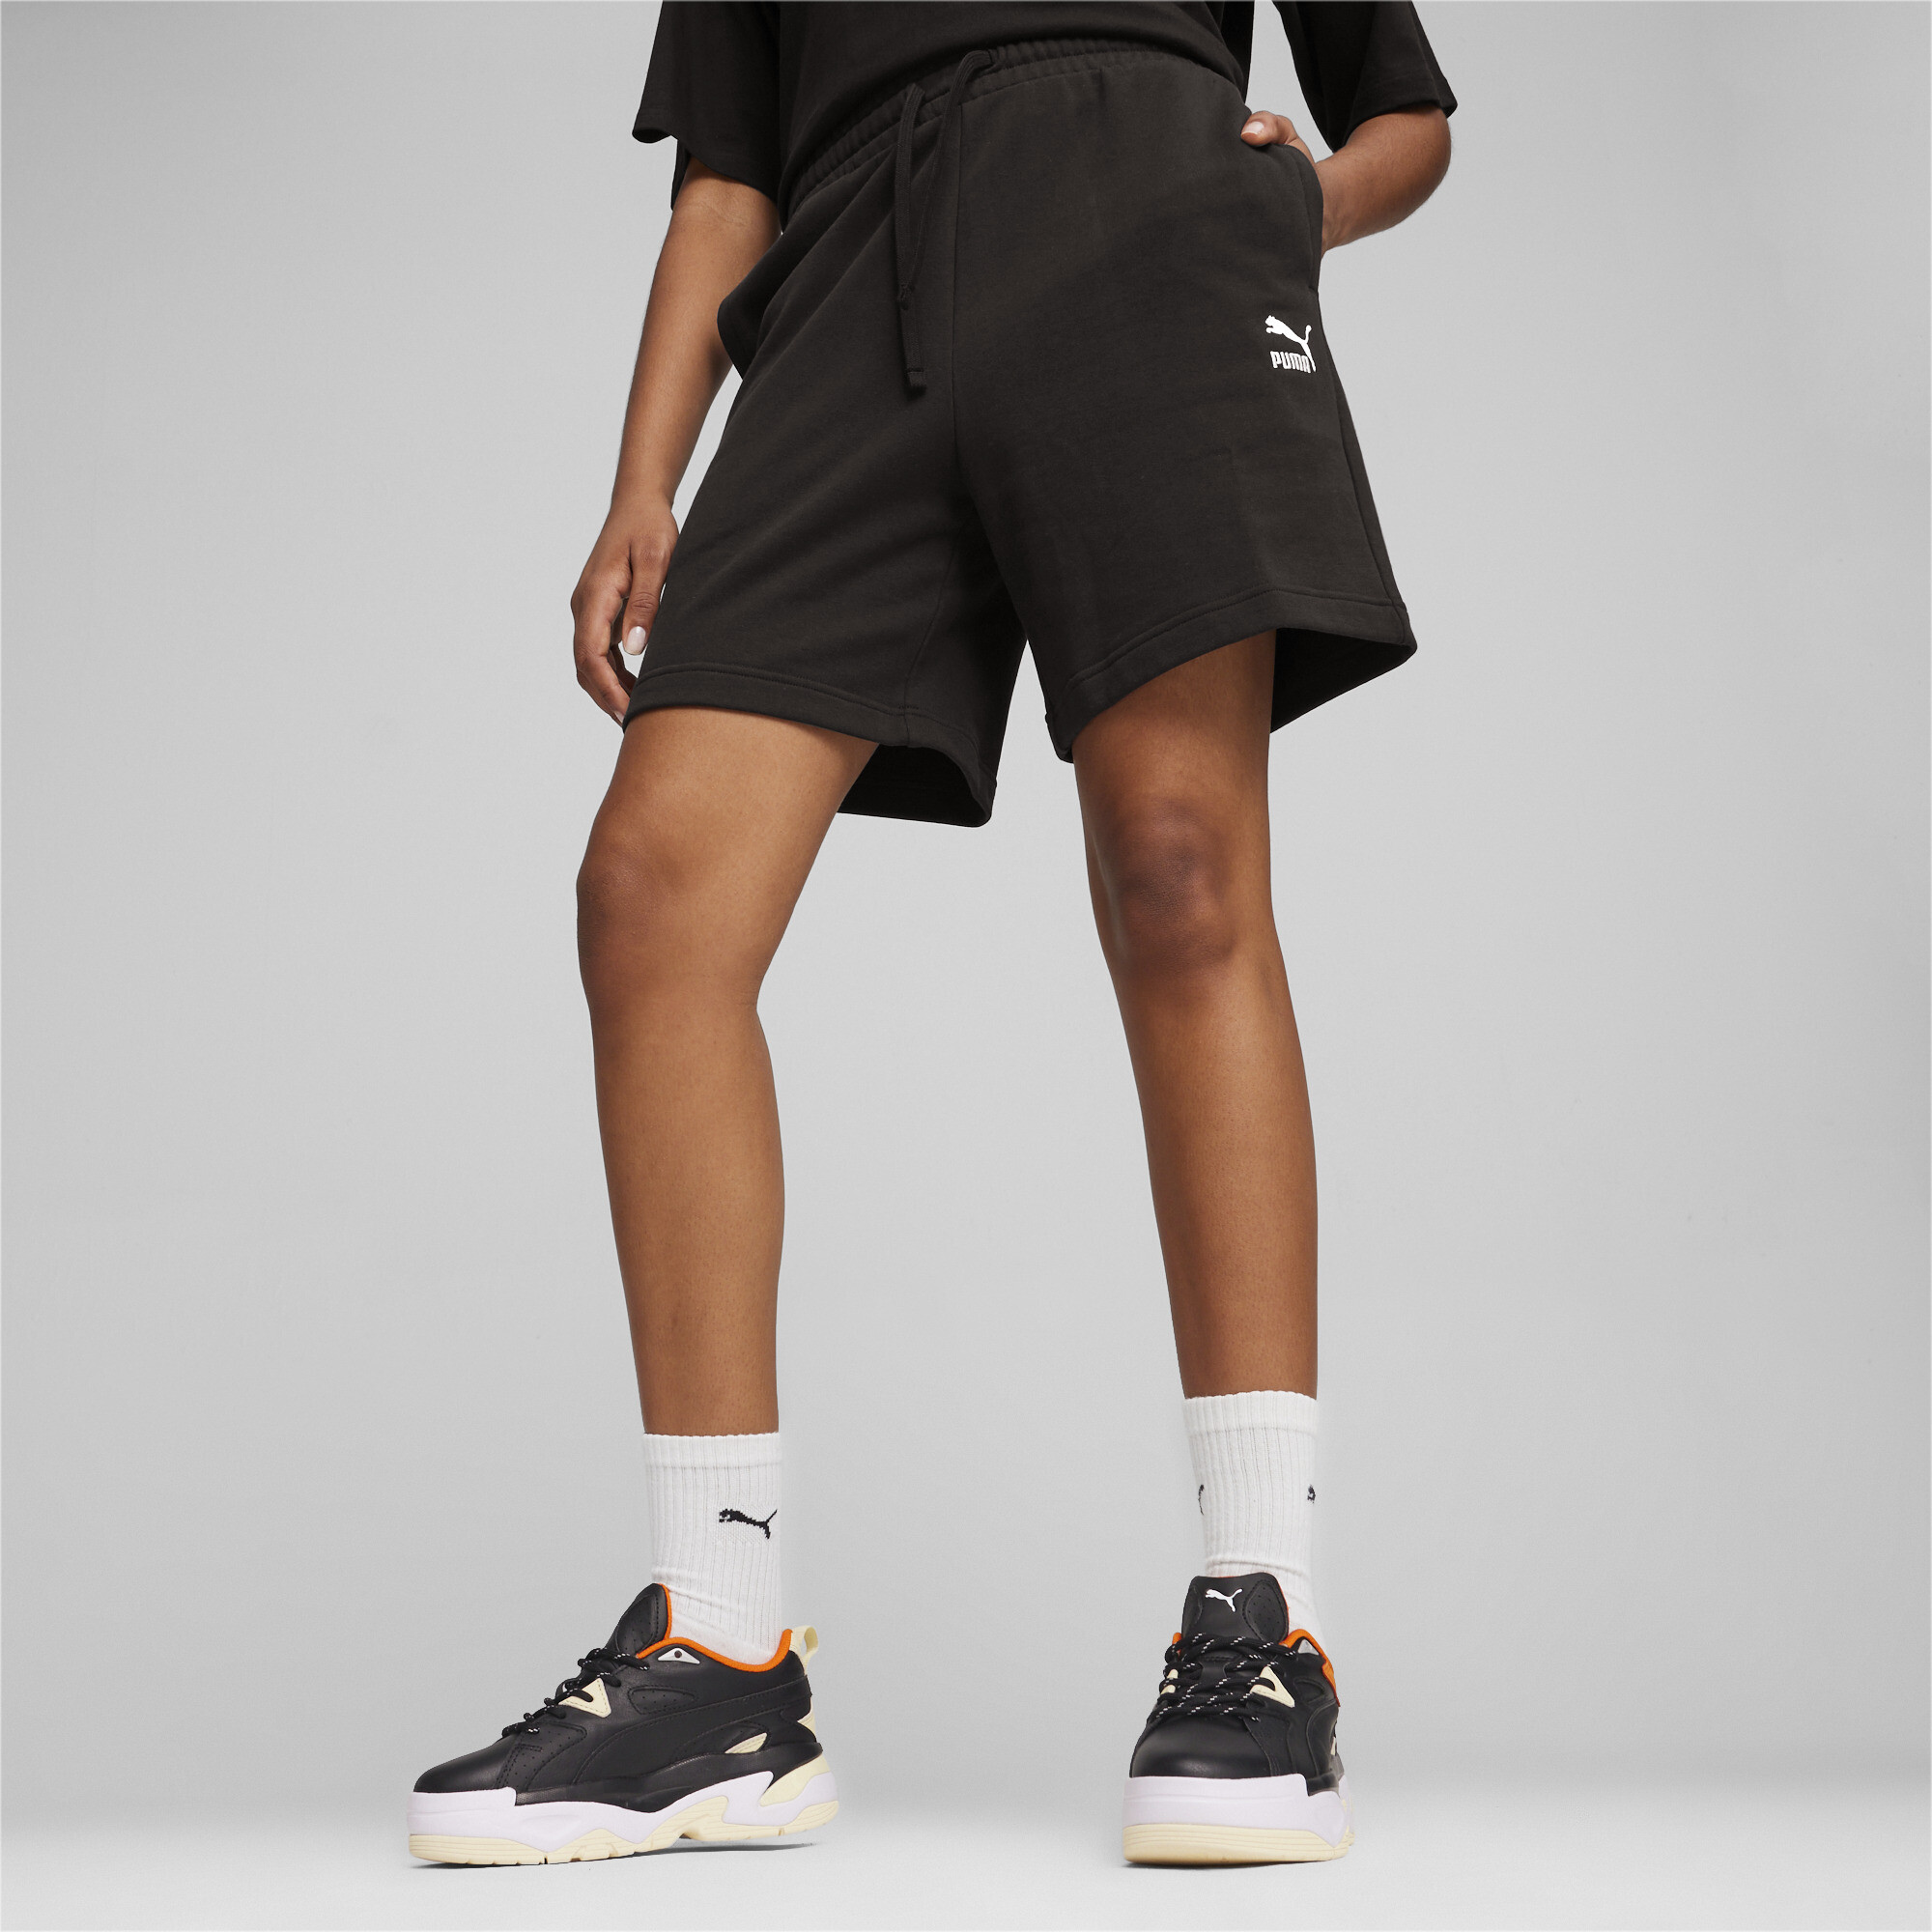 Puma BETTER CLASSICS Shorts, Black, Size L, Clothing